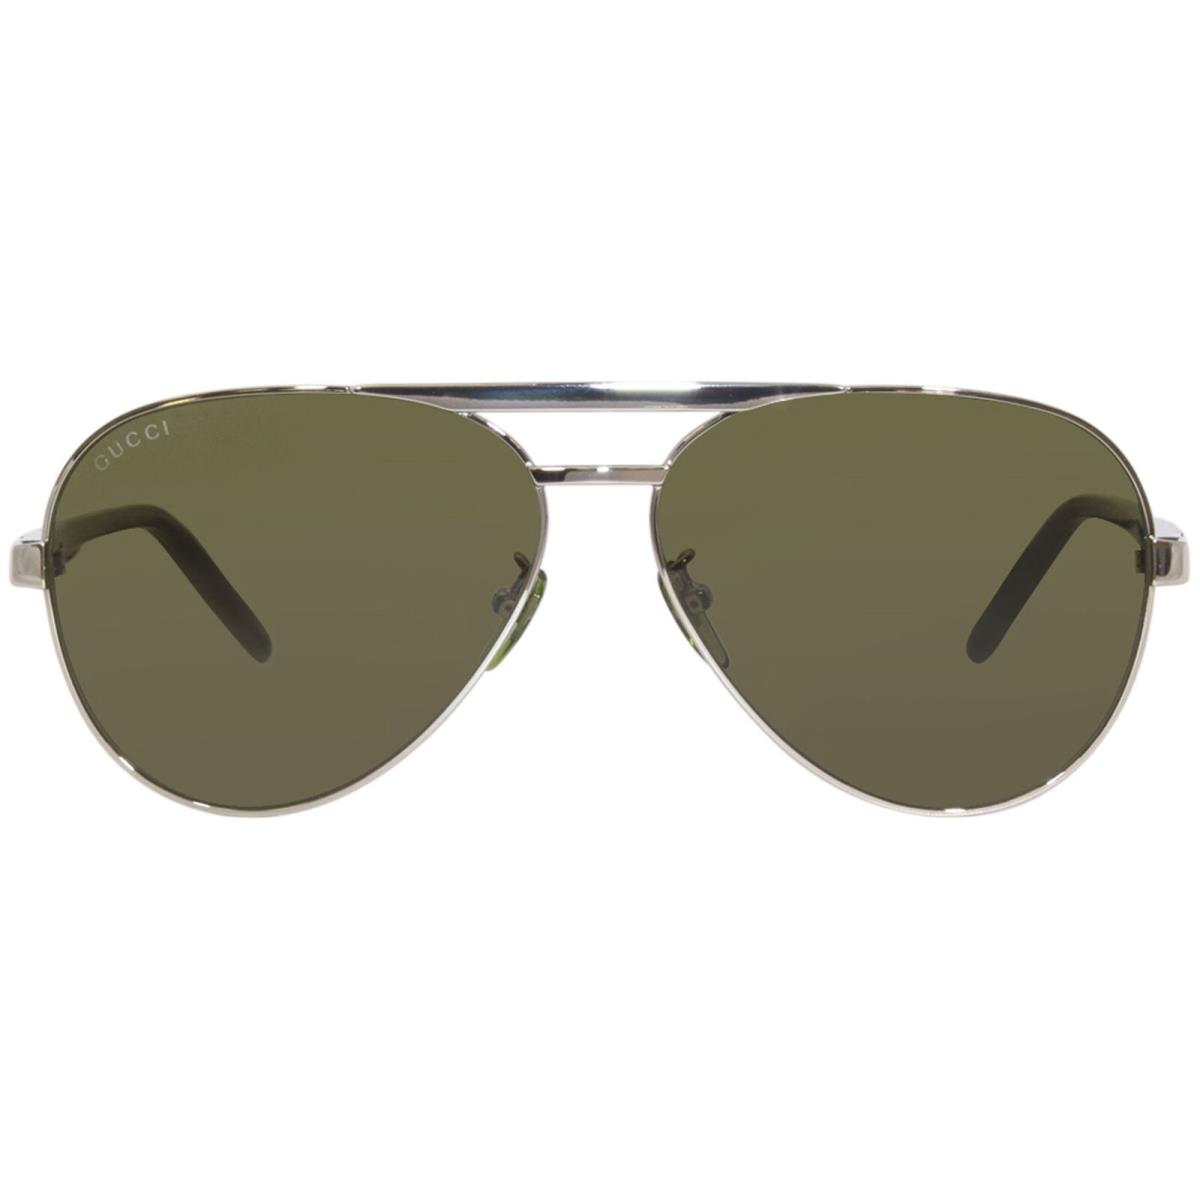 Gucci GG1163S 002 Sunglasses Men`s Silver/grey/green Lenses Pilot Shape 60mm